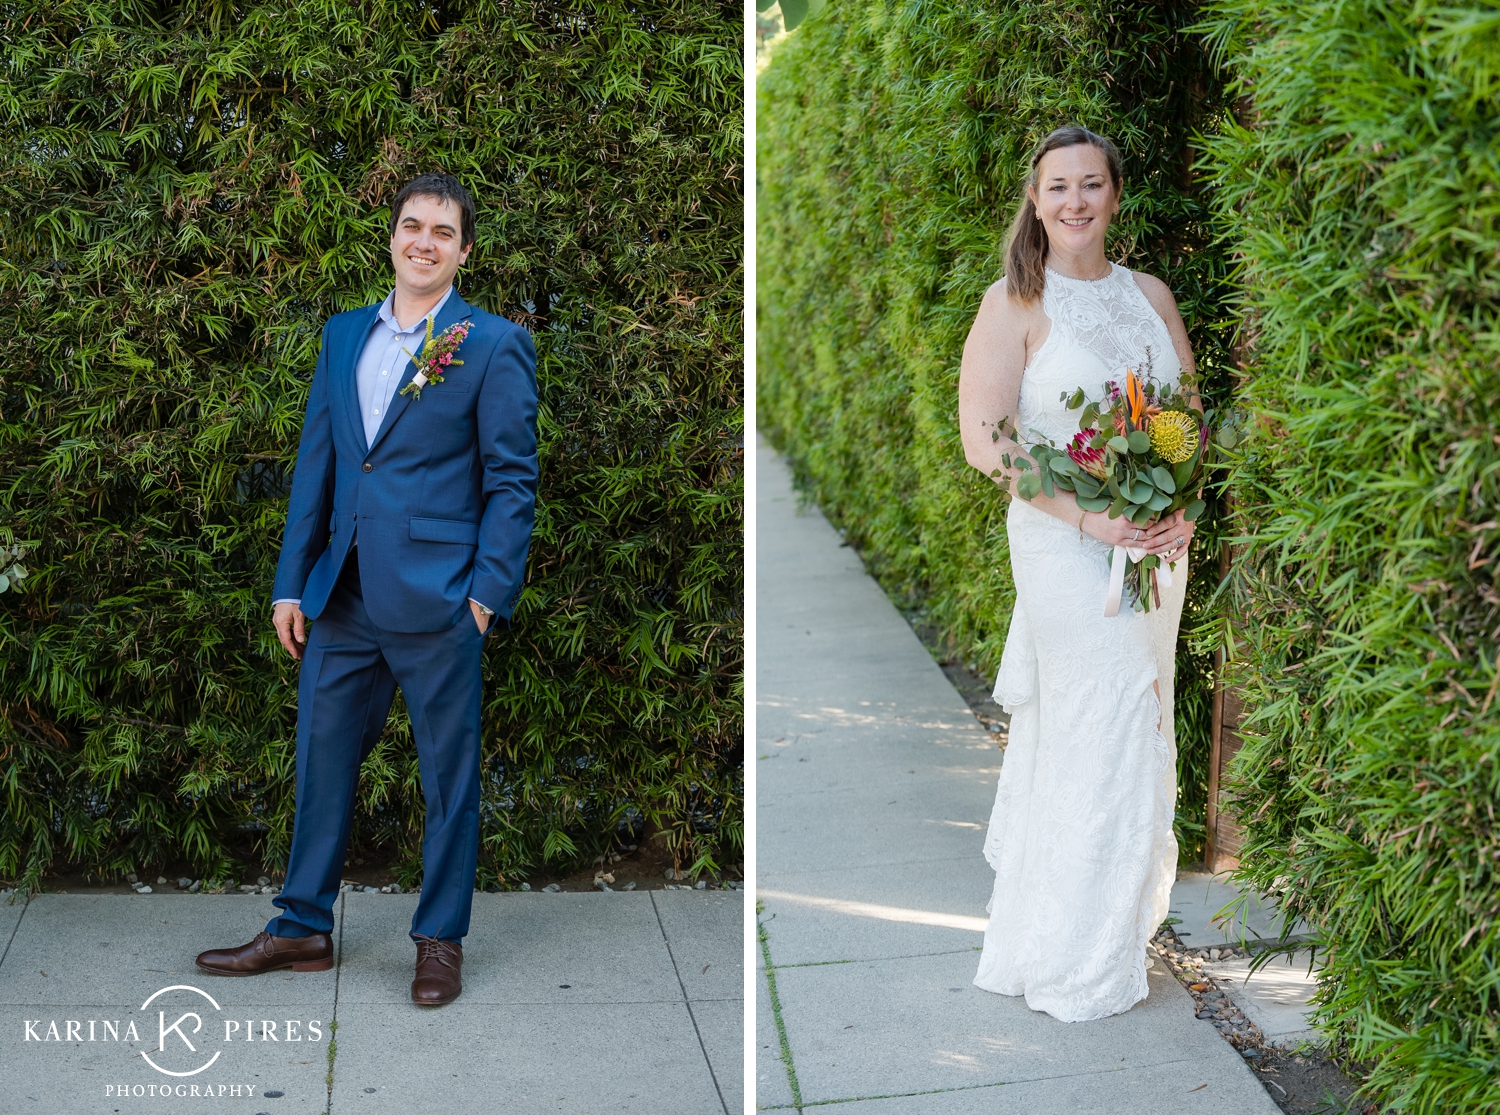 Lindsay and Kyle’s Backyard Wedding Ceremony in Santa Monica